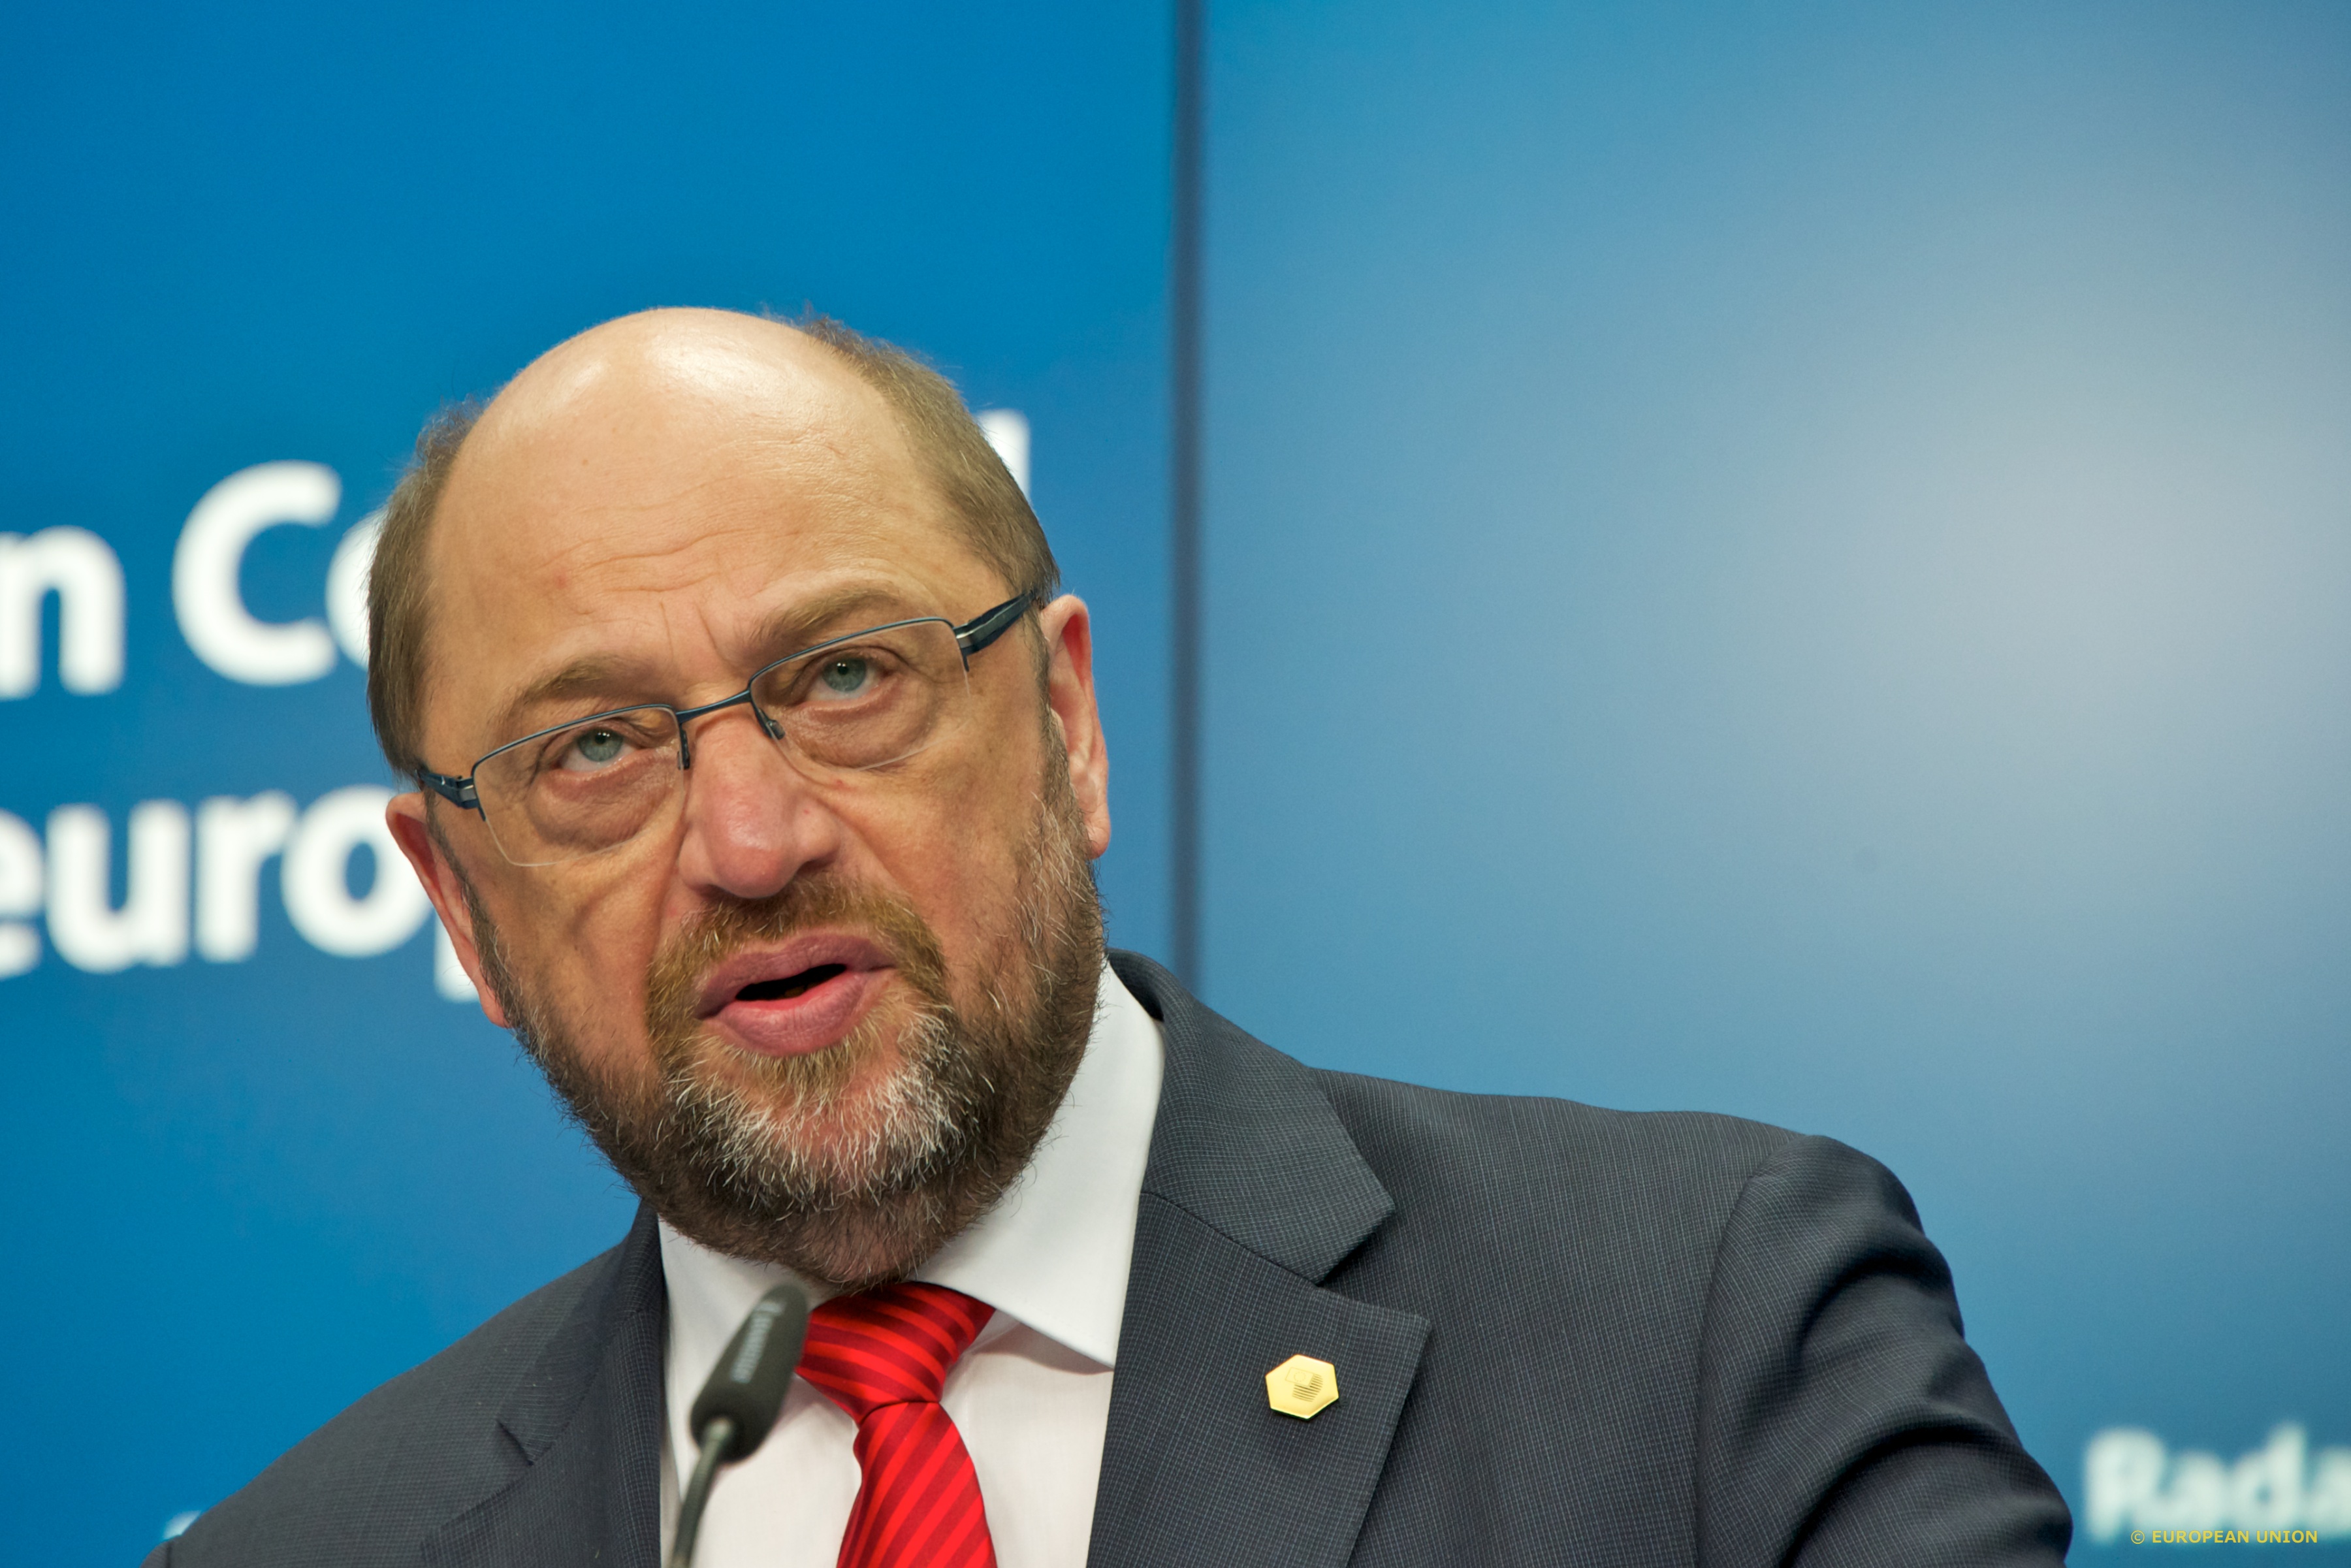 Martin Schulz: Goodbye Eurobonds